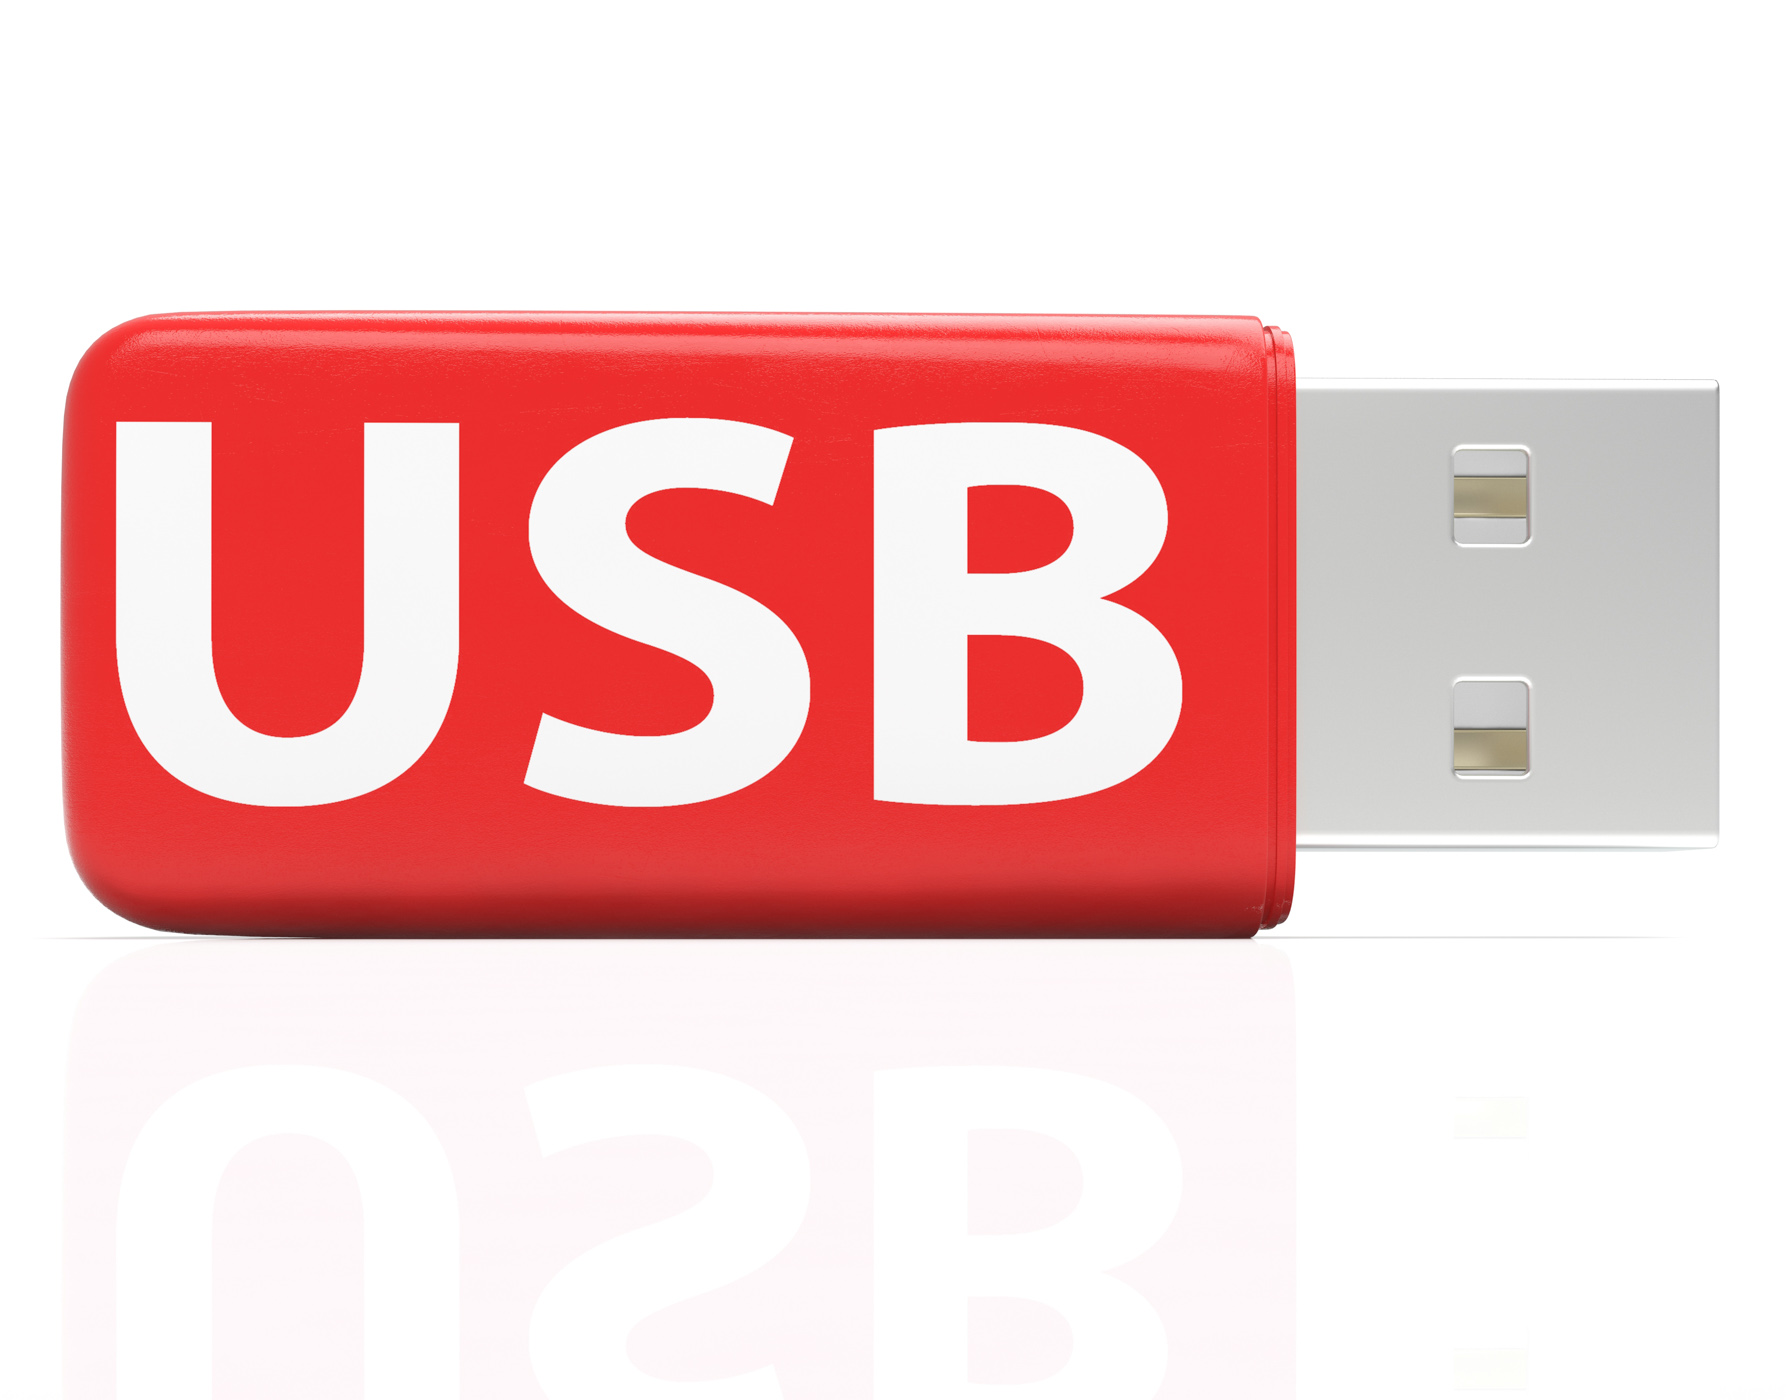 Usb flash stick shows portable storage or memory photo